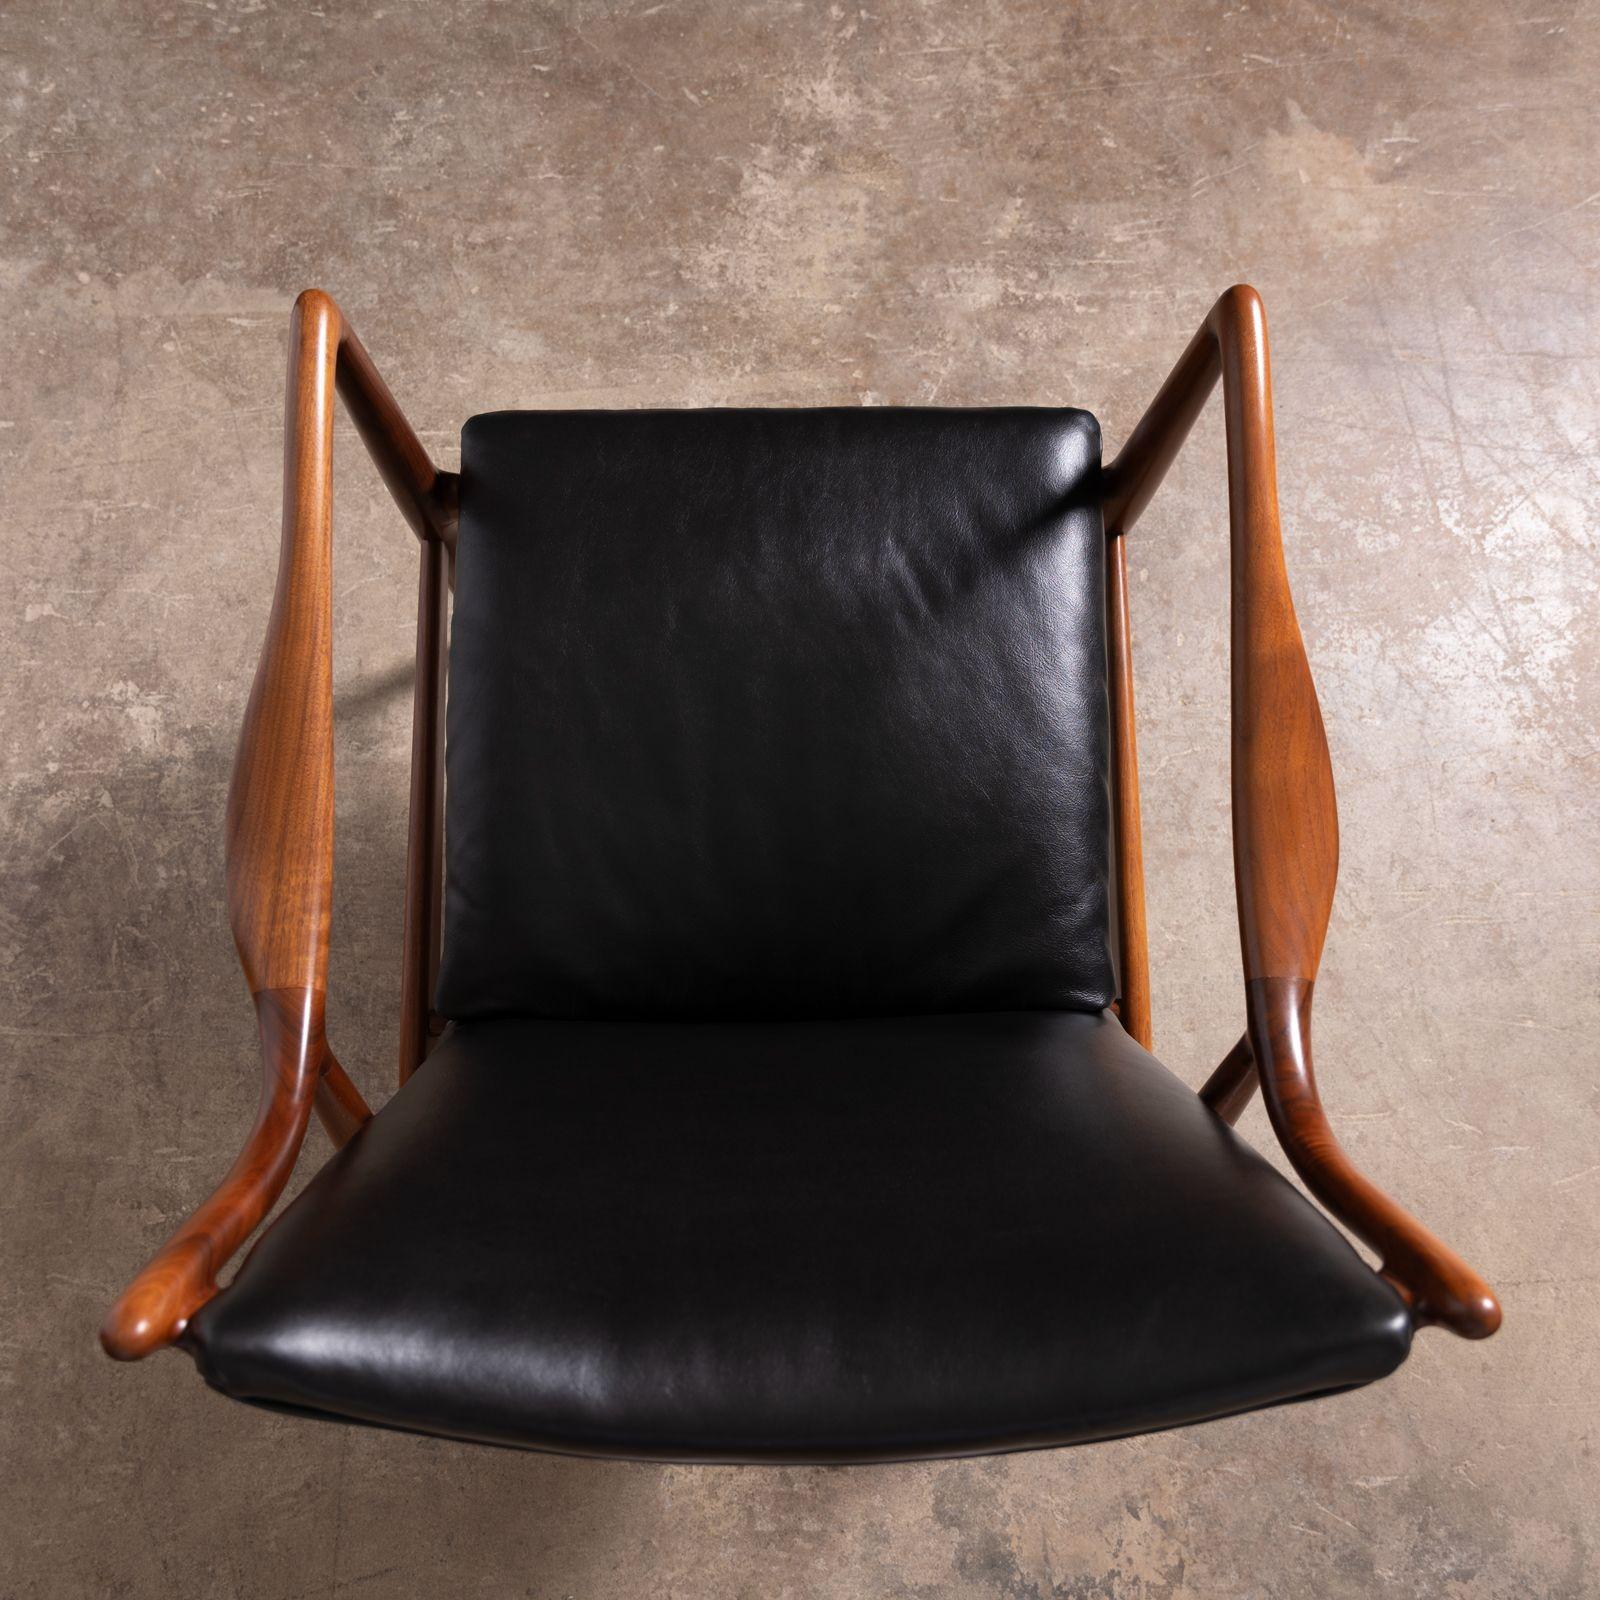 Finn Juhl NV-45 Scandinavian Lounge Chairs in Walnut and Black Leather 1950s For Sale 7